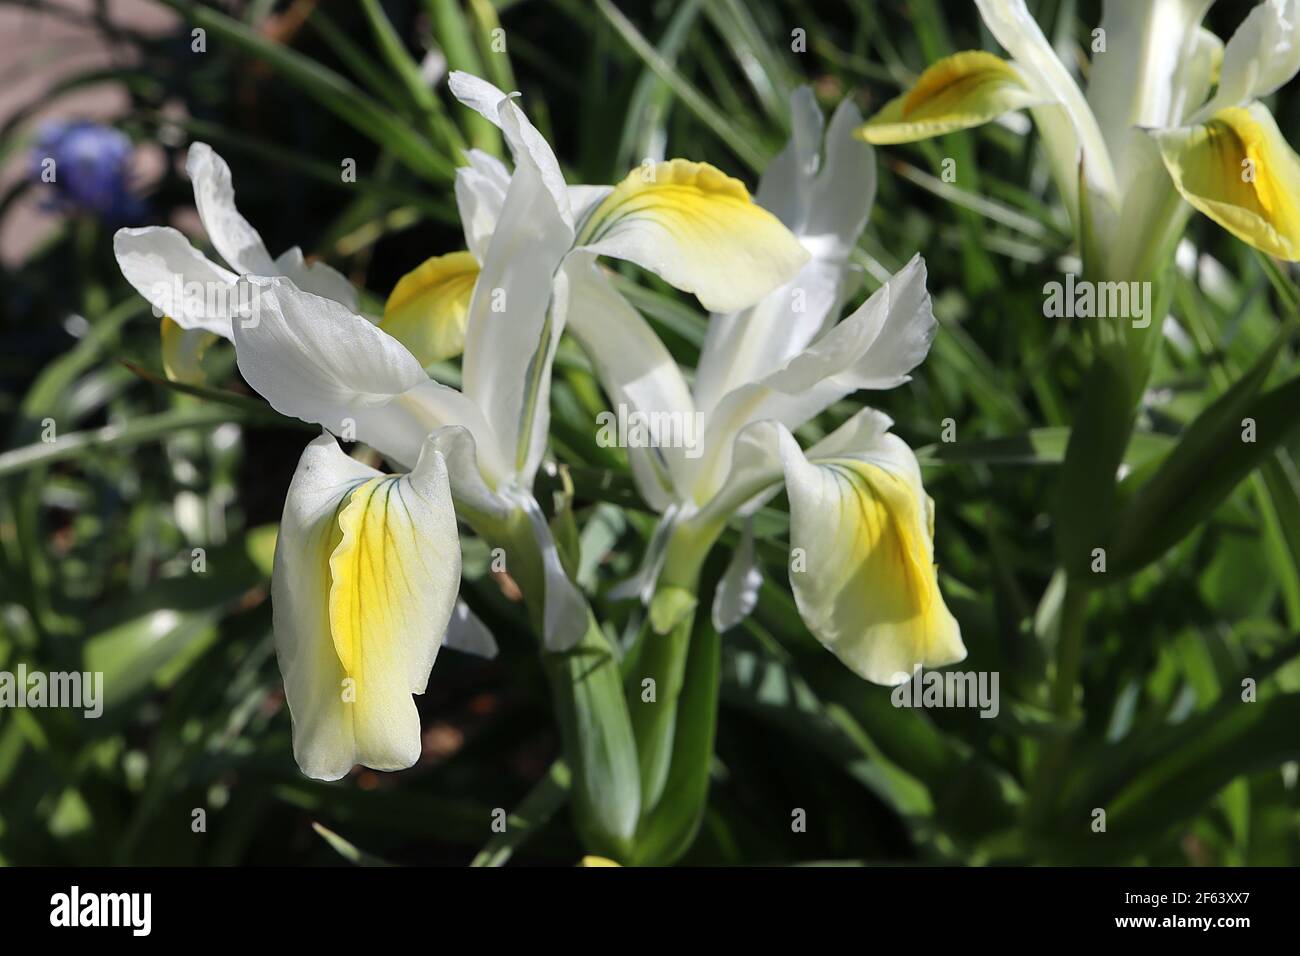 Iris magnifica 'Alba' White Juno Iris – white flowers with yellow crests,  March, England, UK Stock Photo